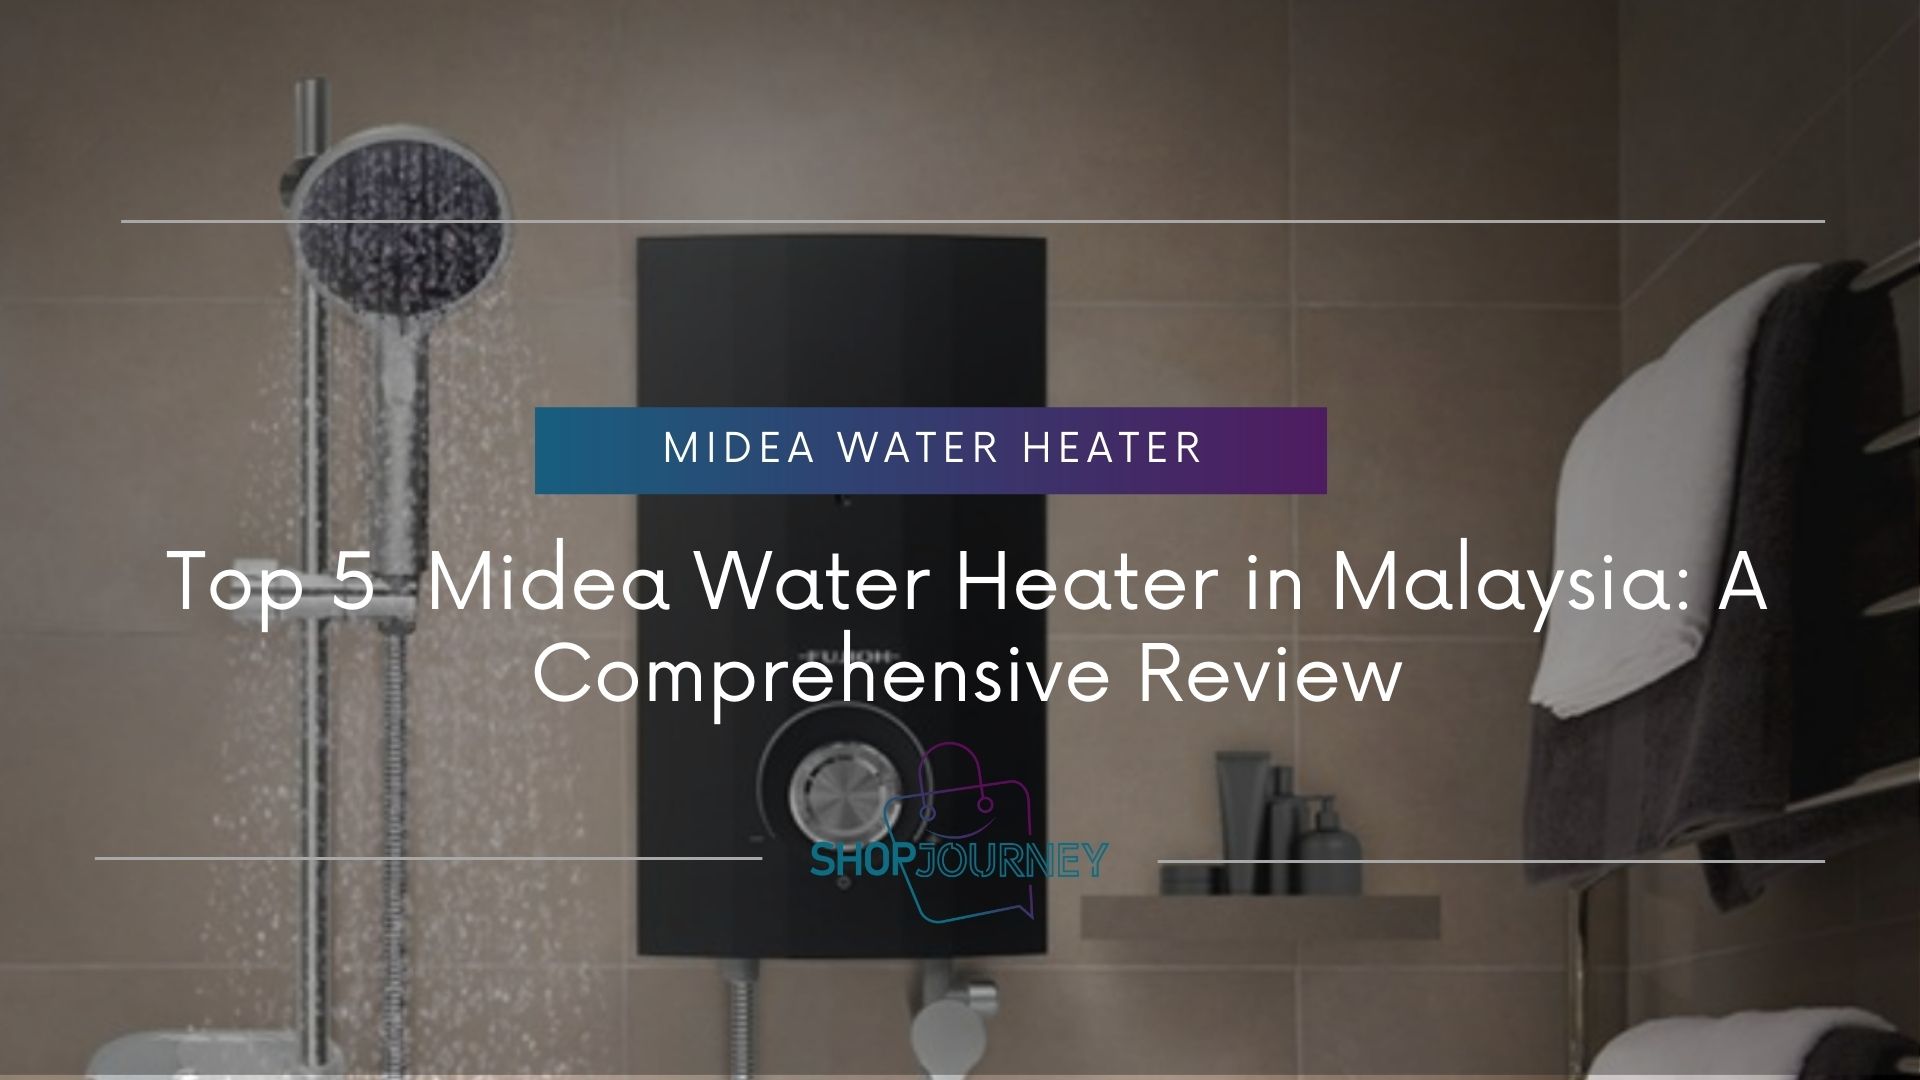 Midea water heater - shop journey